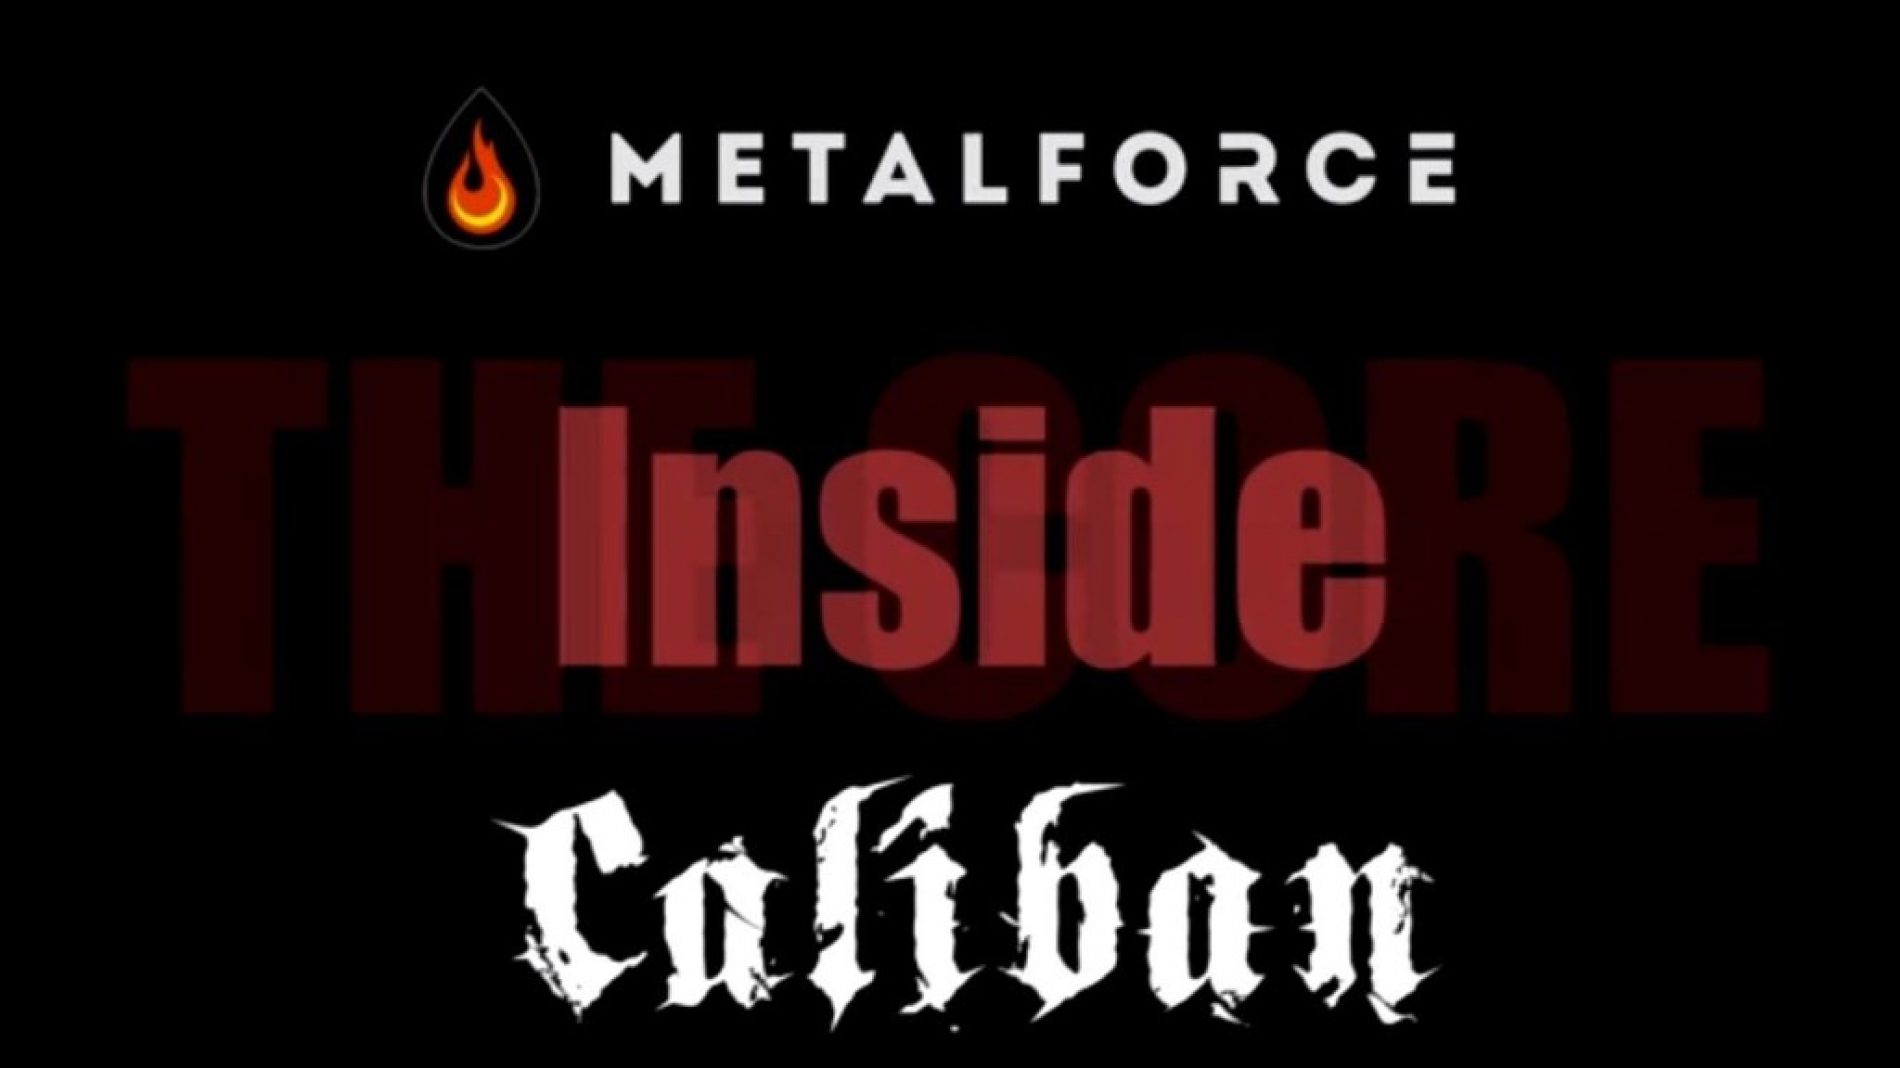 Inside the CORE #4: Caliban (Interviu video Metalforce)